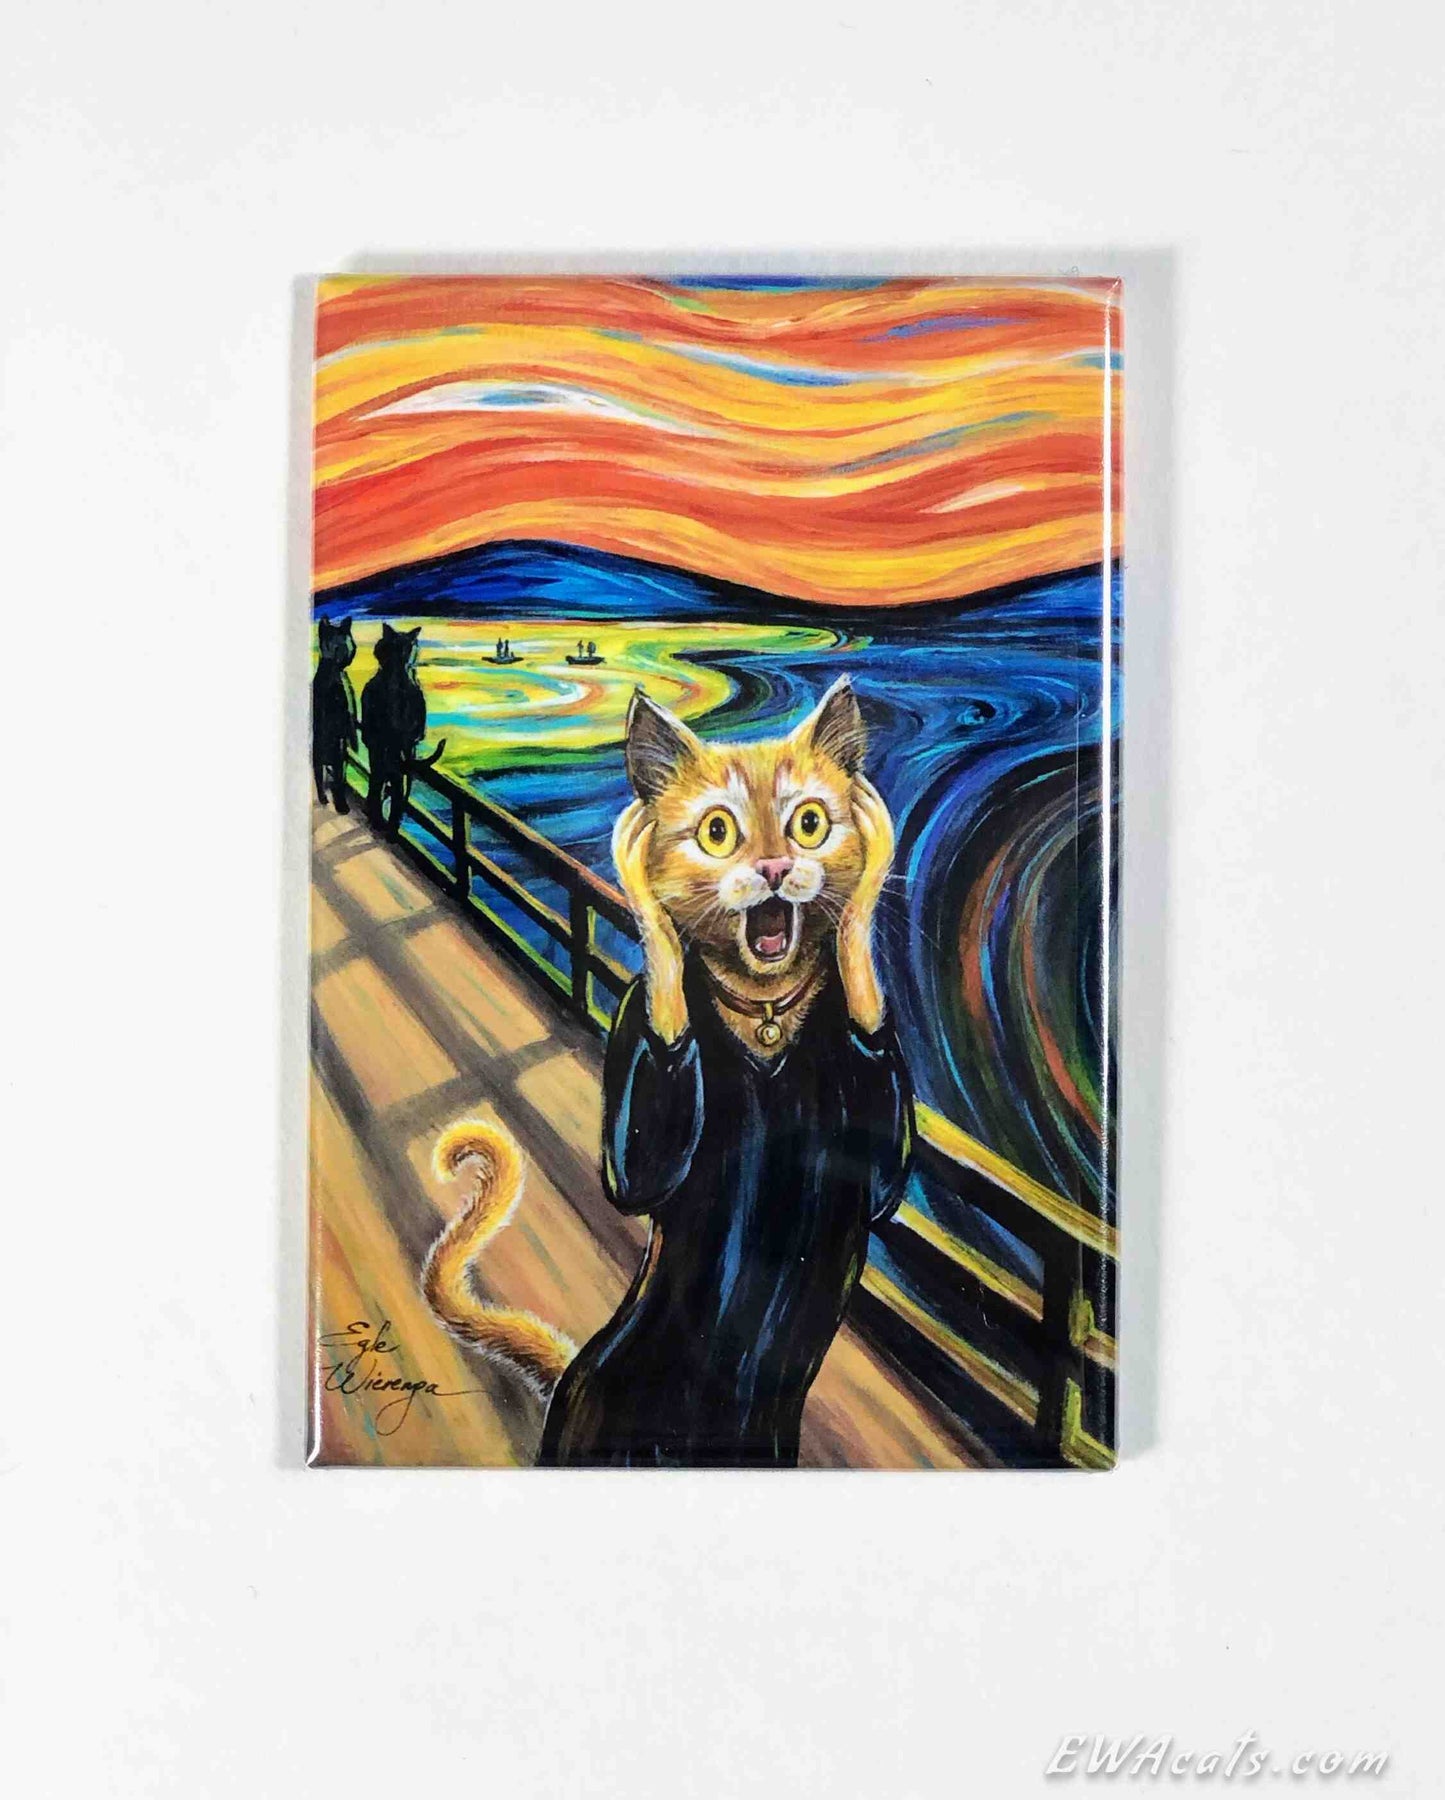 MAGNET 2"x 3" Rectangle "The Cat Scream"